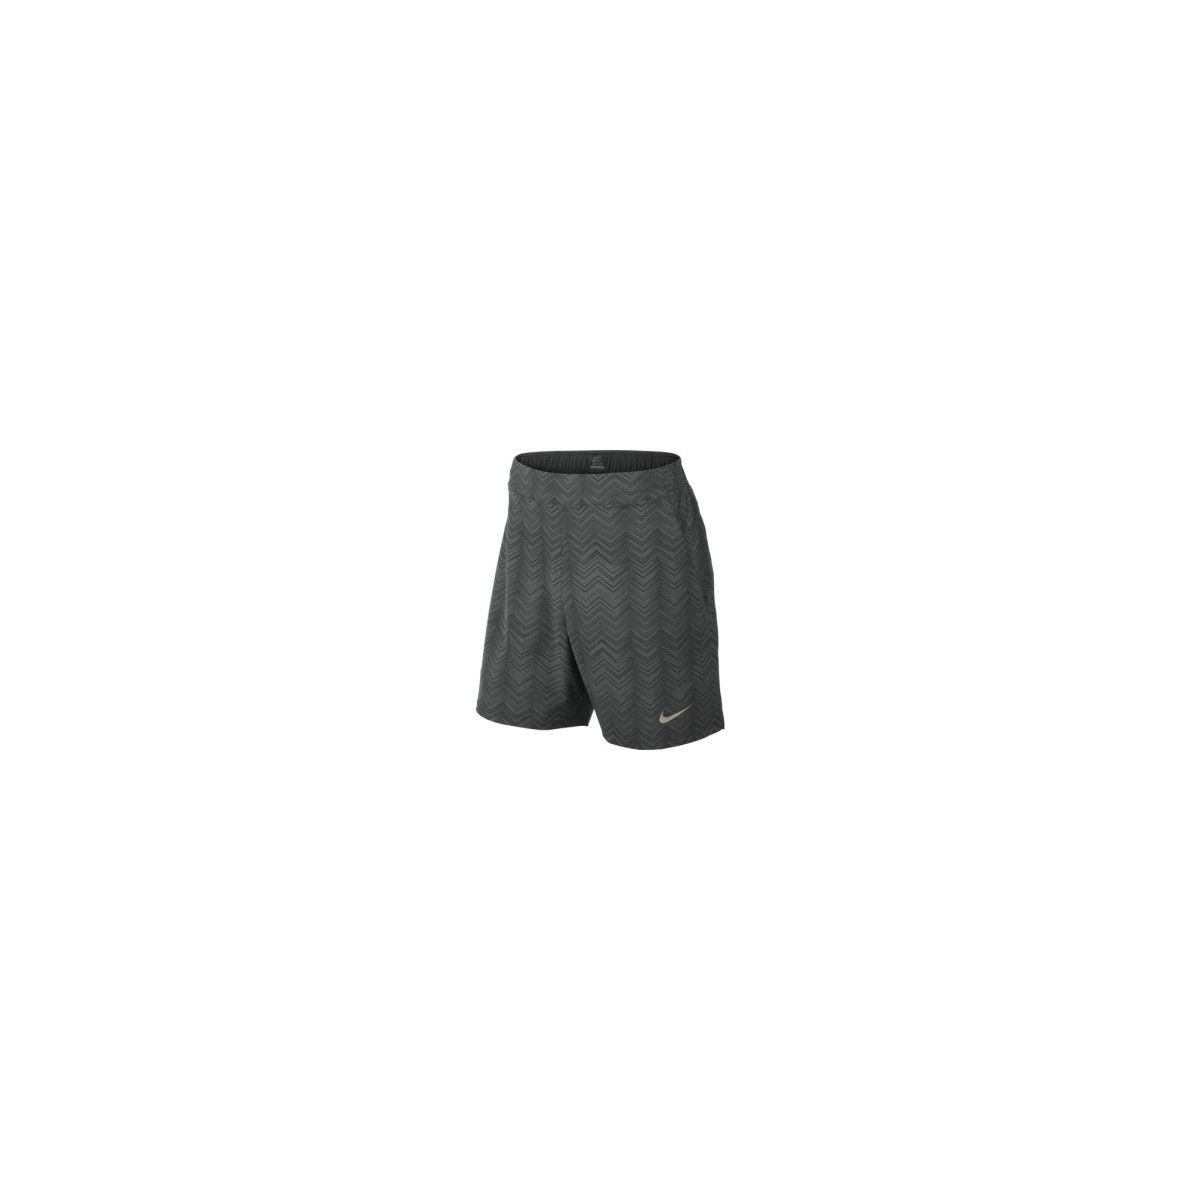 Short Nike Gladiator Premier 7" (18 cm) garçon gris foncé